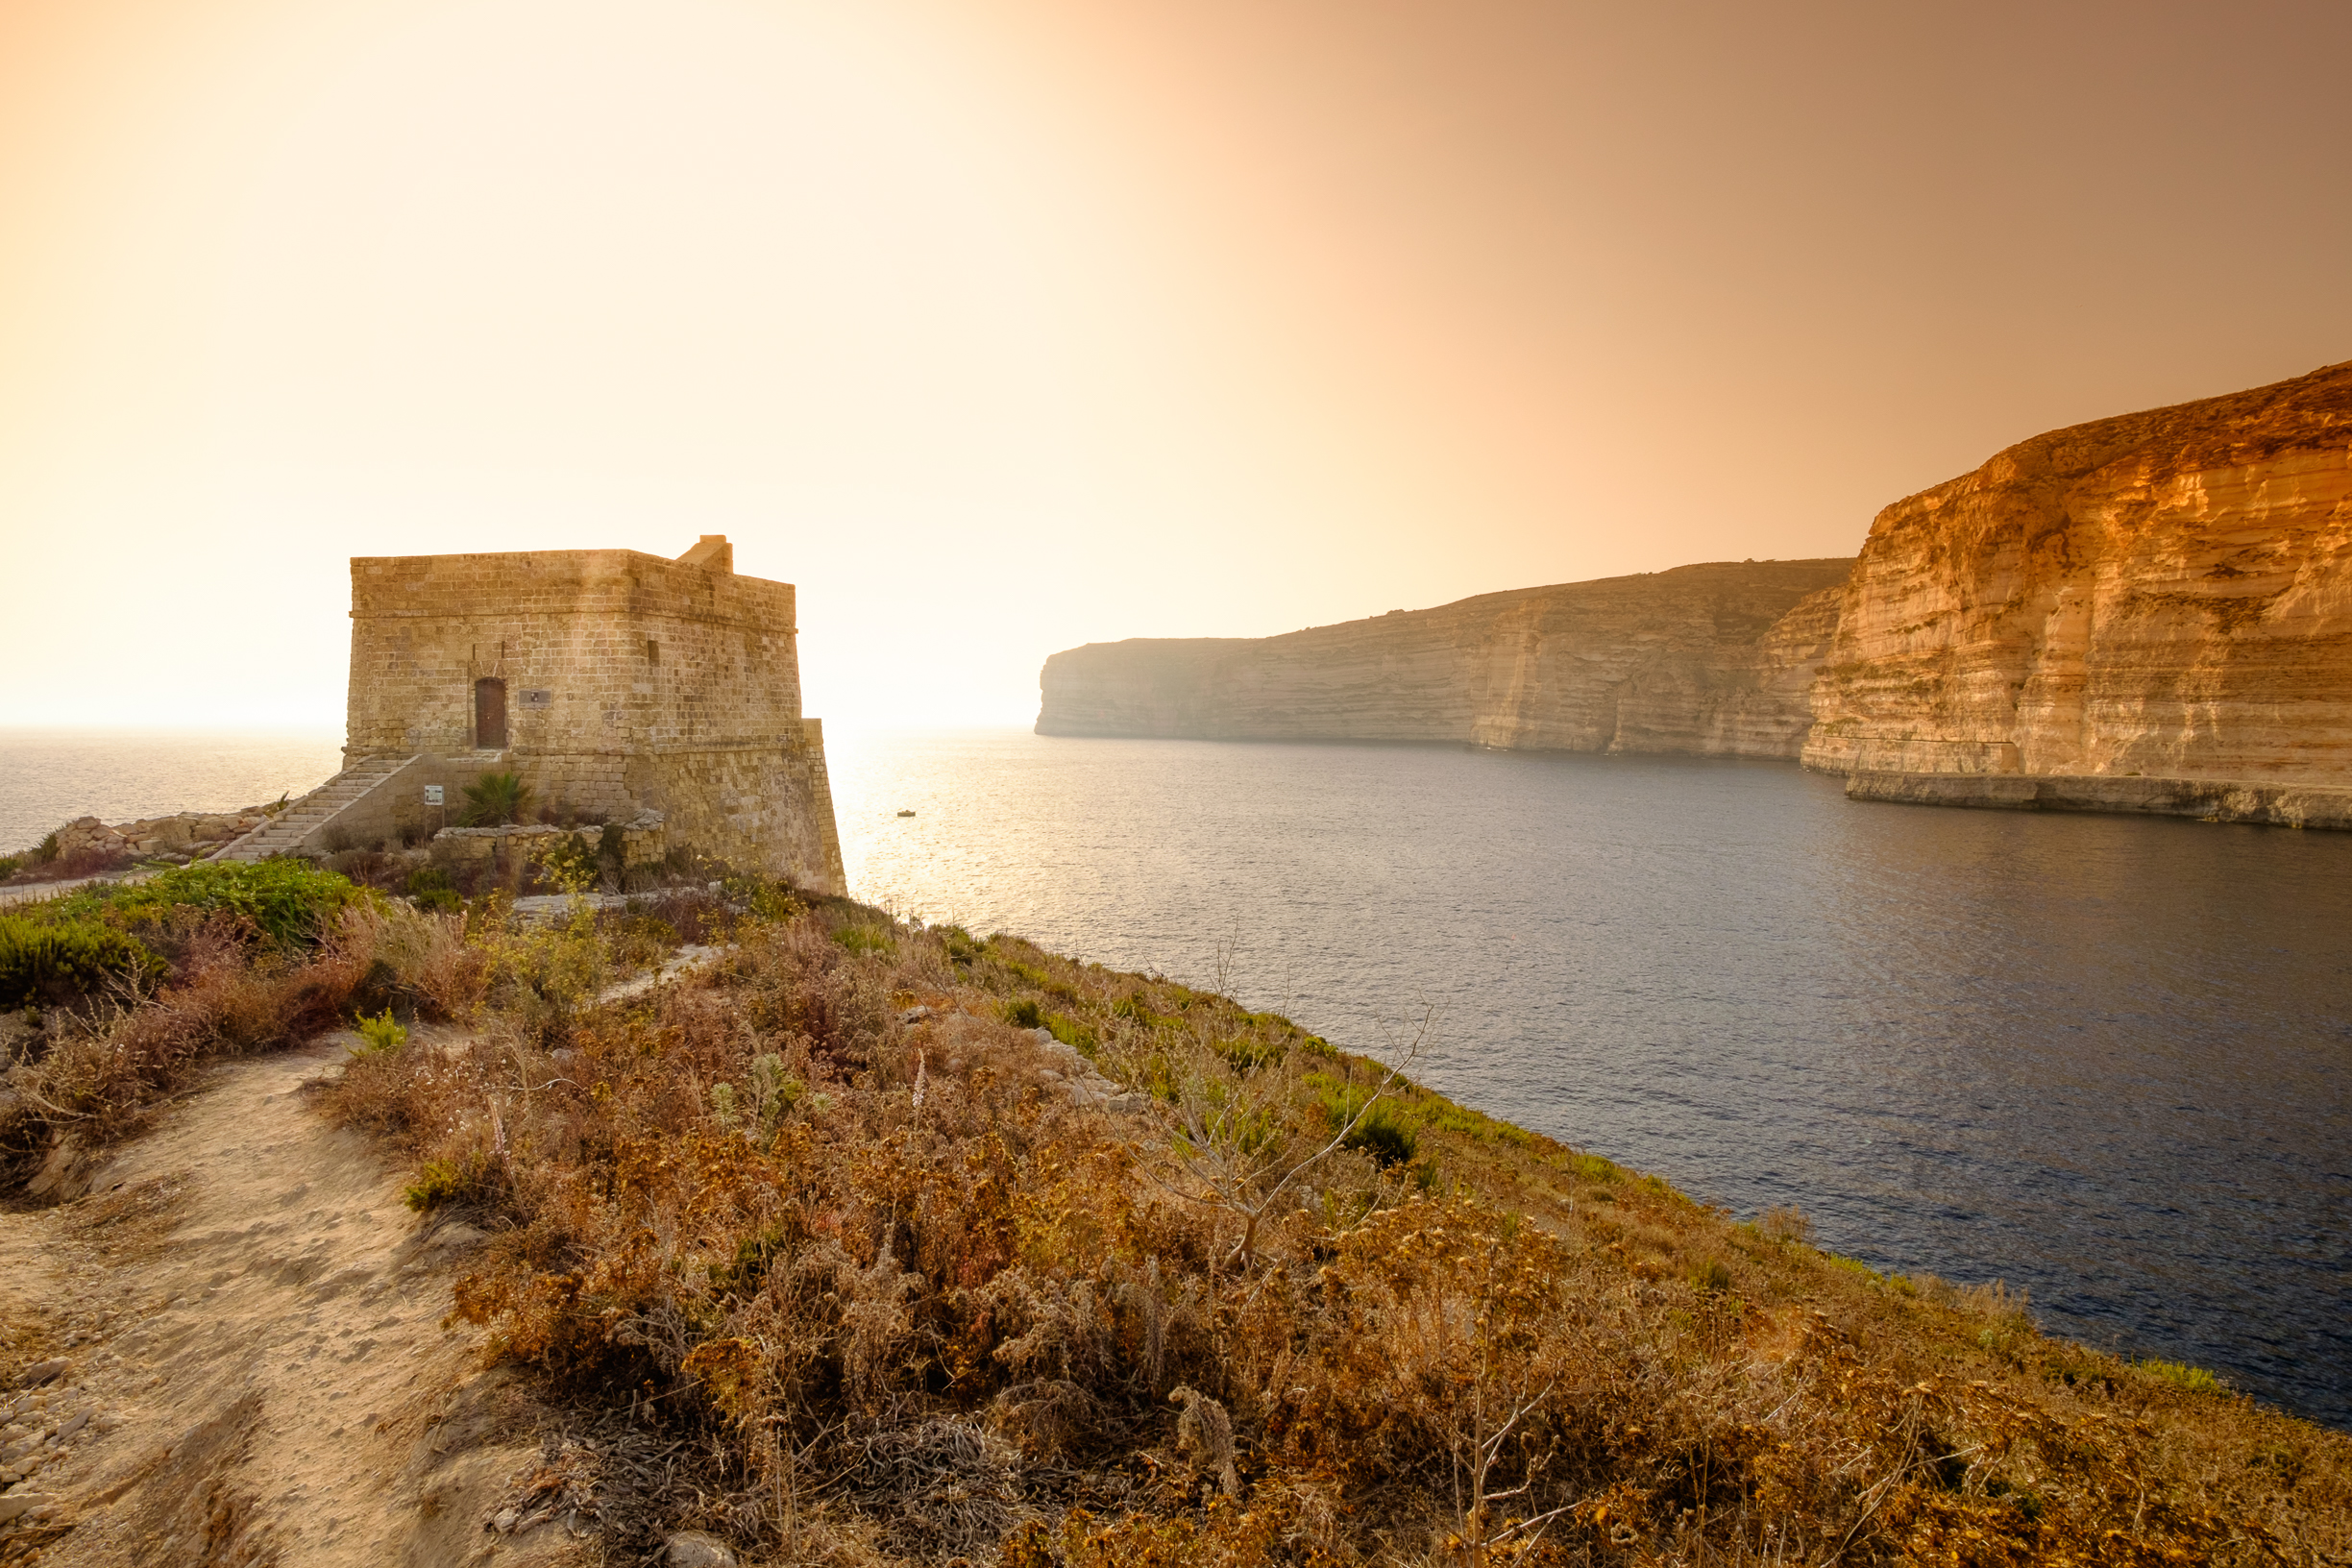 Malta, Xlendi Bay